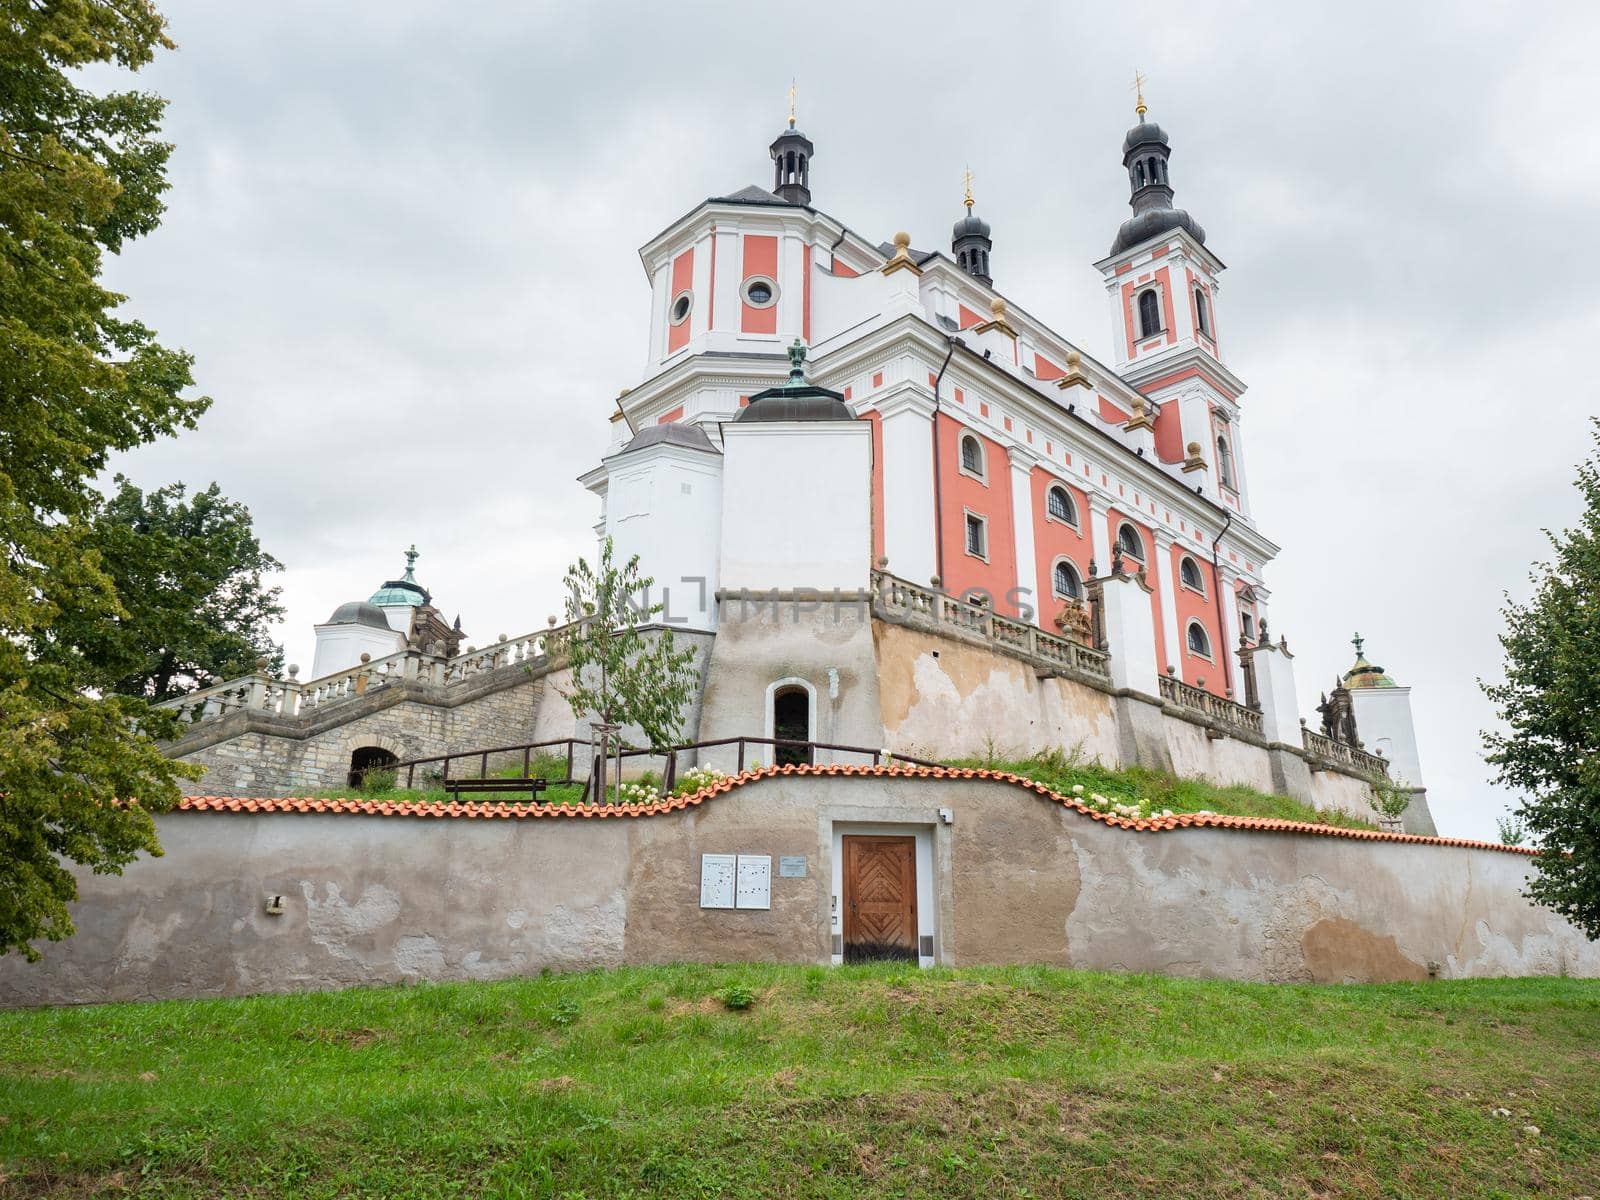 Church in Luze Kosumberk, Czech Republic by rdonar2